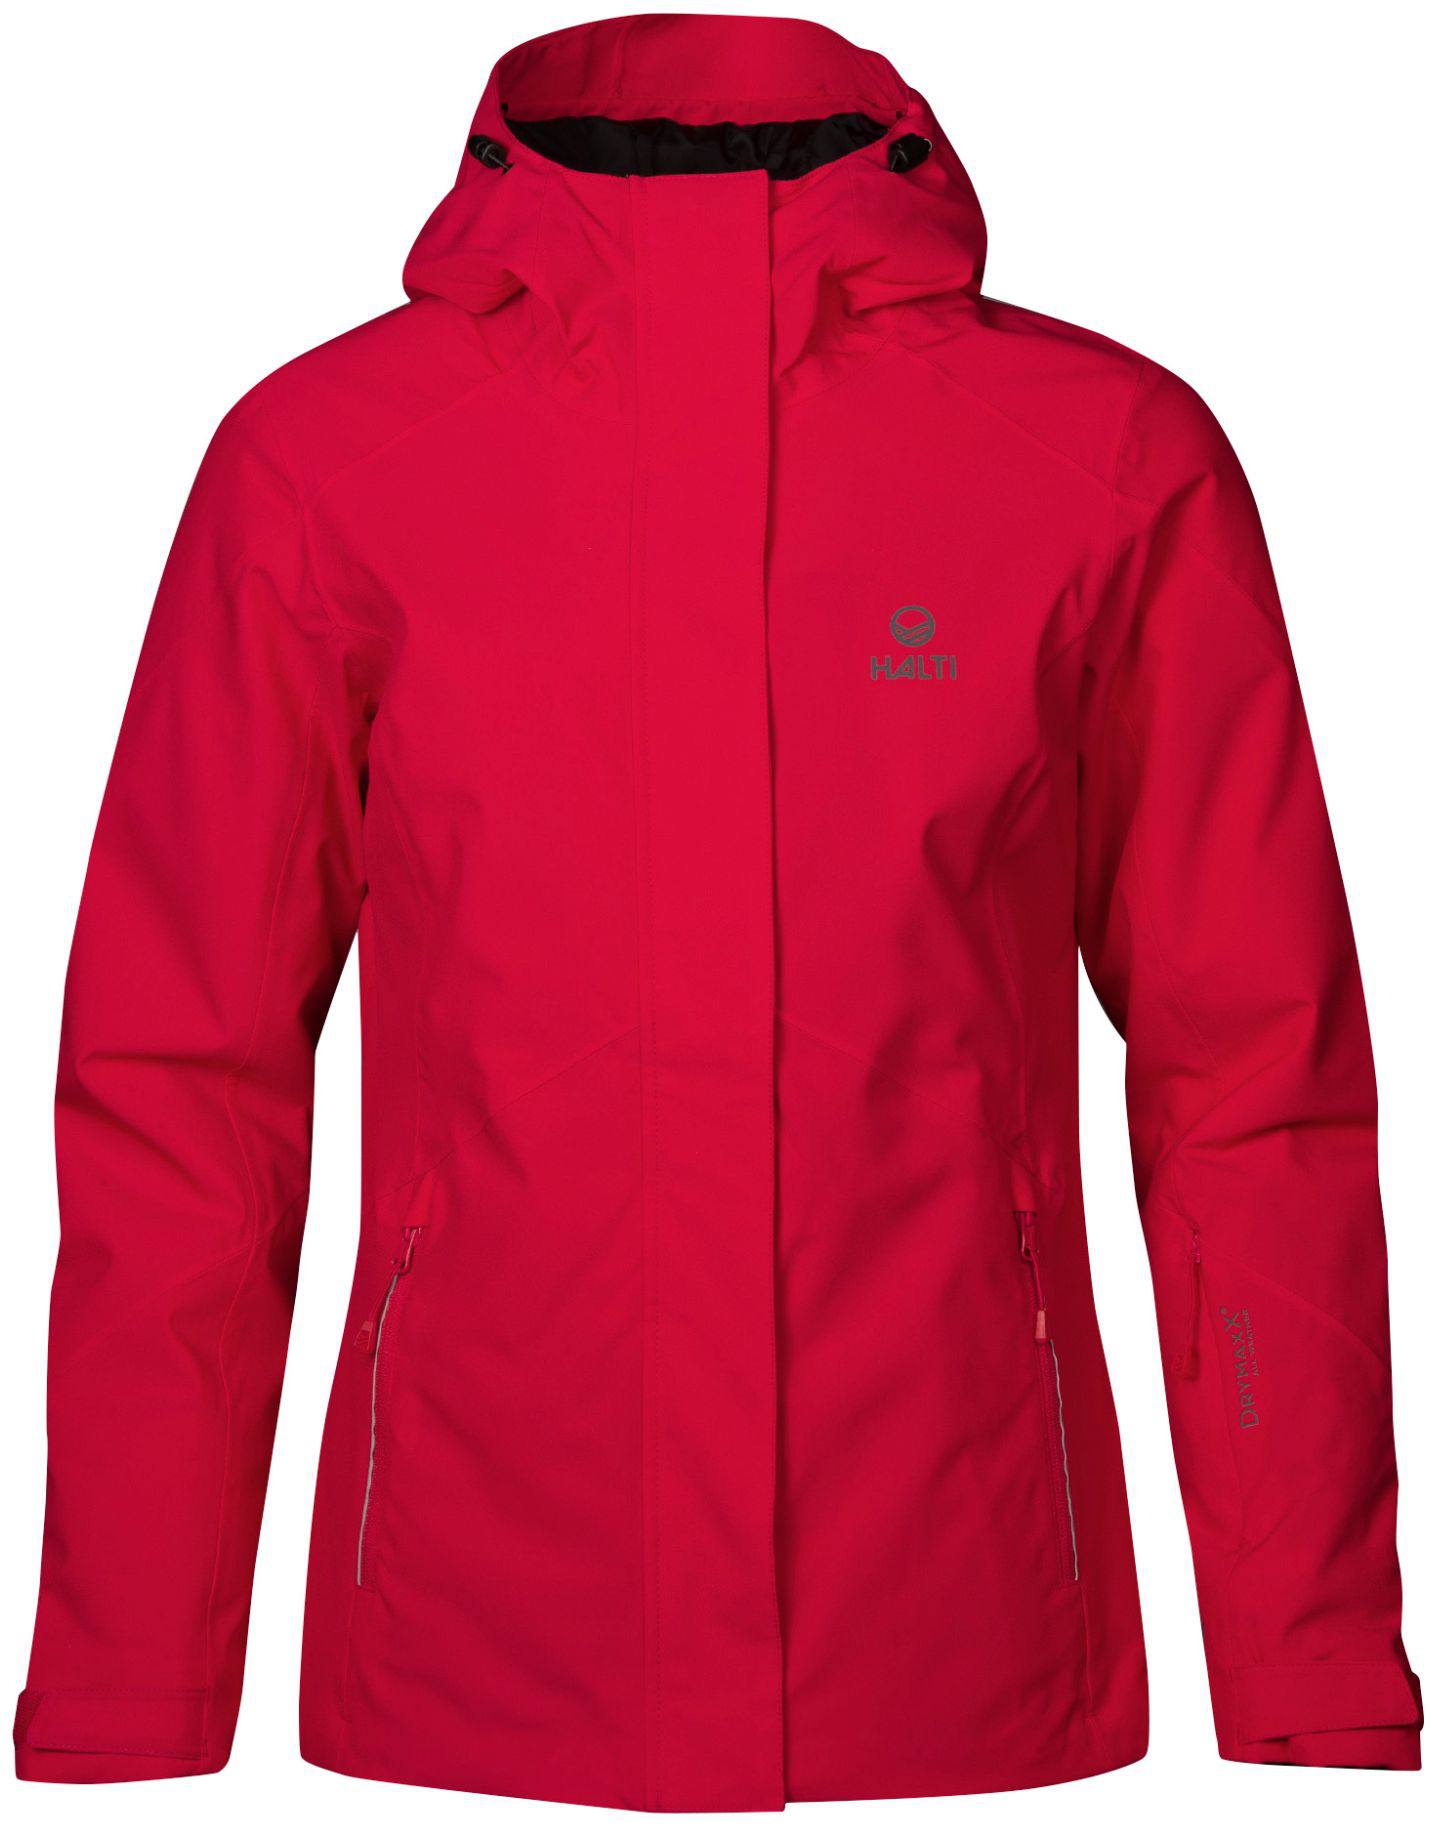 Halti Women’s Corinne Ski Jacket Red 44